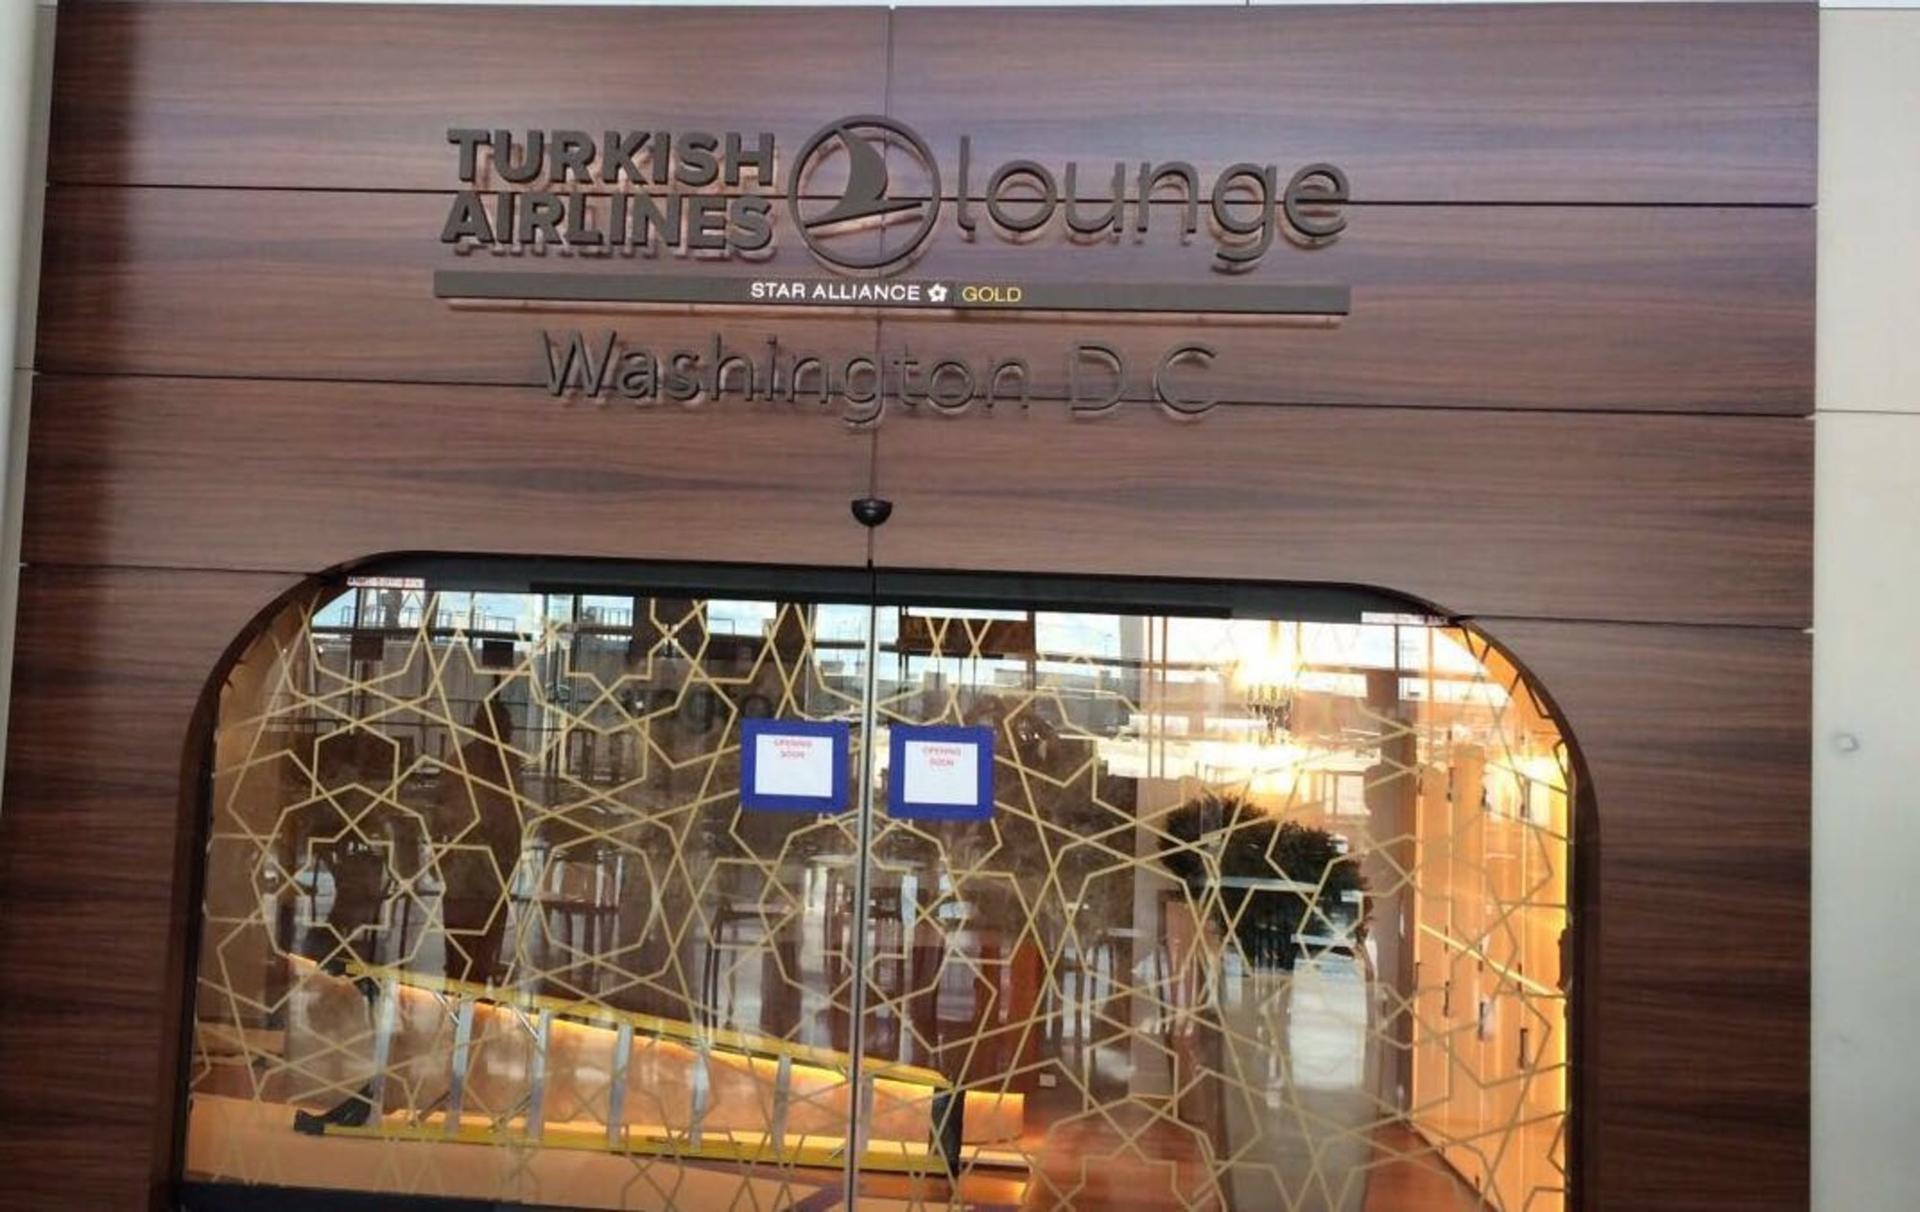 Turkish Airlines Lounge Washington D.C. image 6 of 100